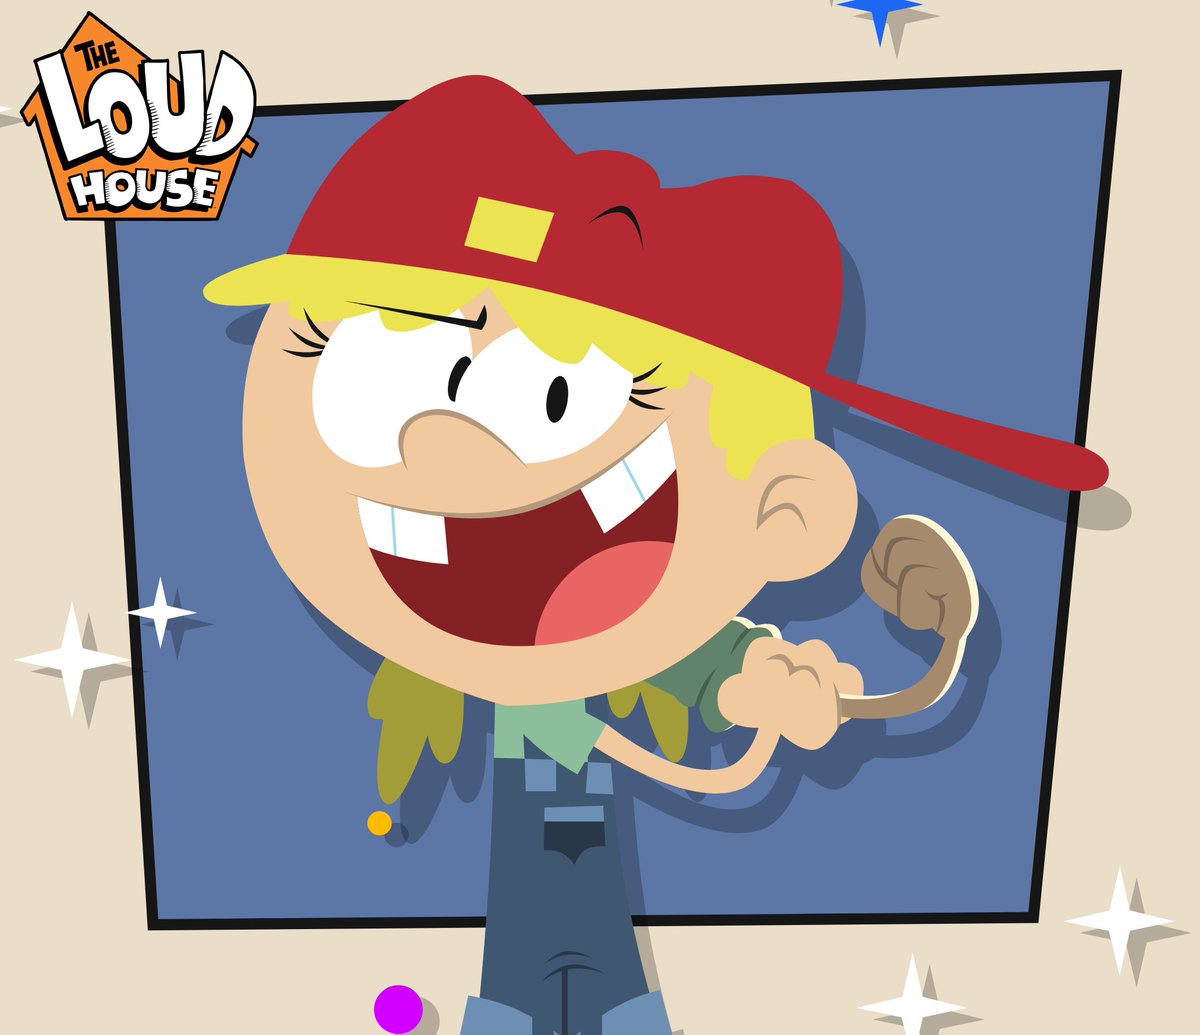 Young Plumber. 🔧
#LanaLoud #TheLoudHouse #Nickelodeon #fanart